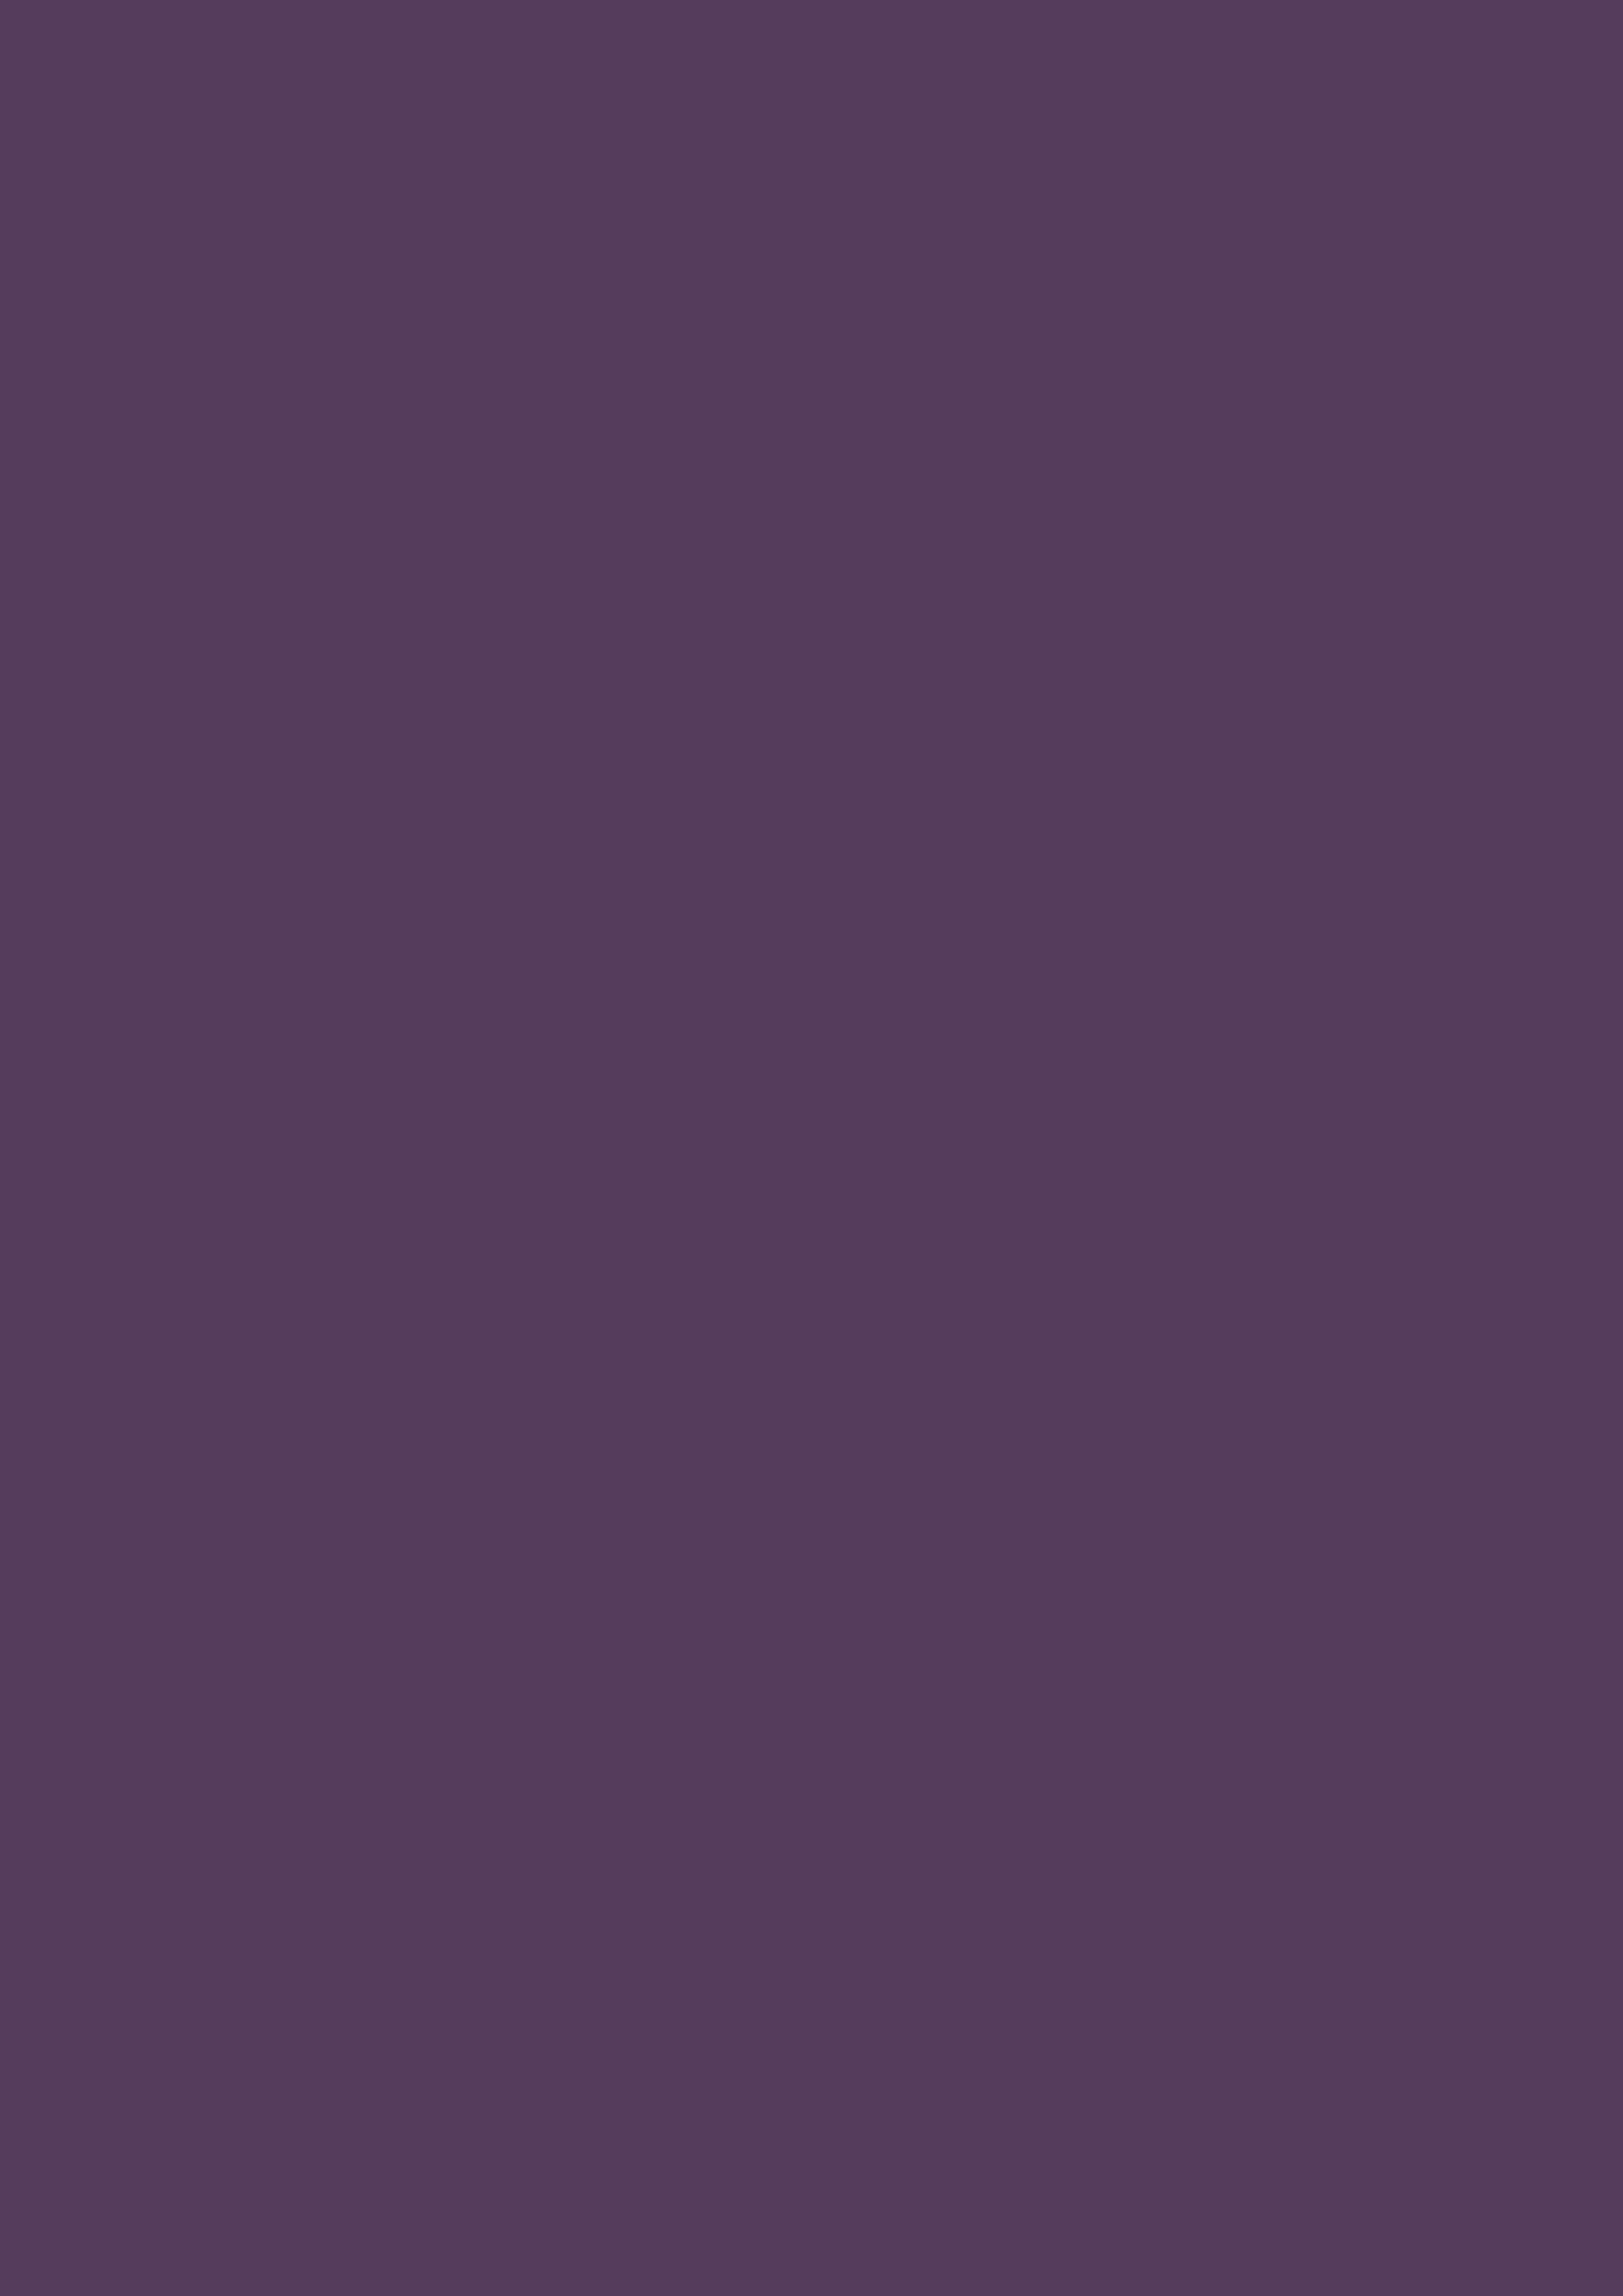 2480x3508 English Violet Solid Color Background